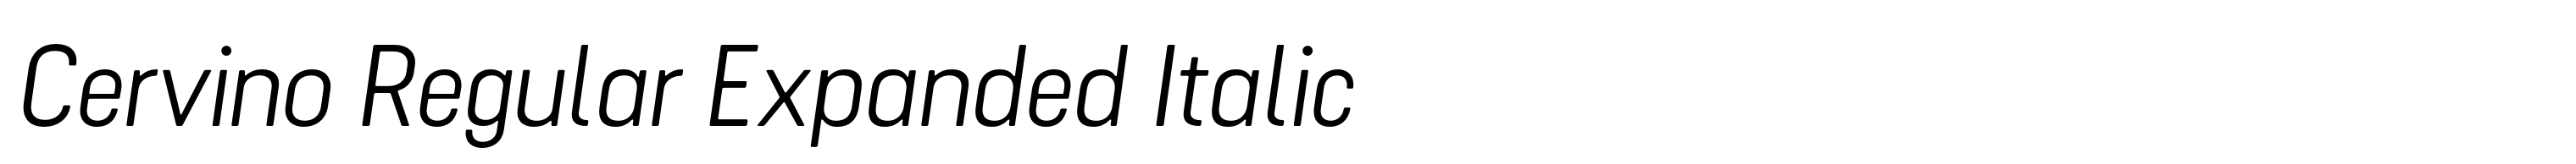 Cervino Regular Expanded Italic